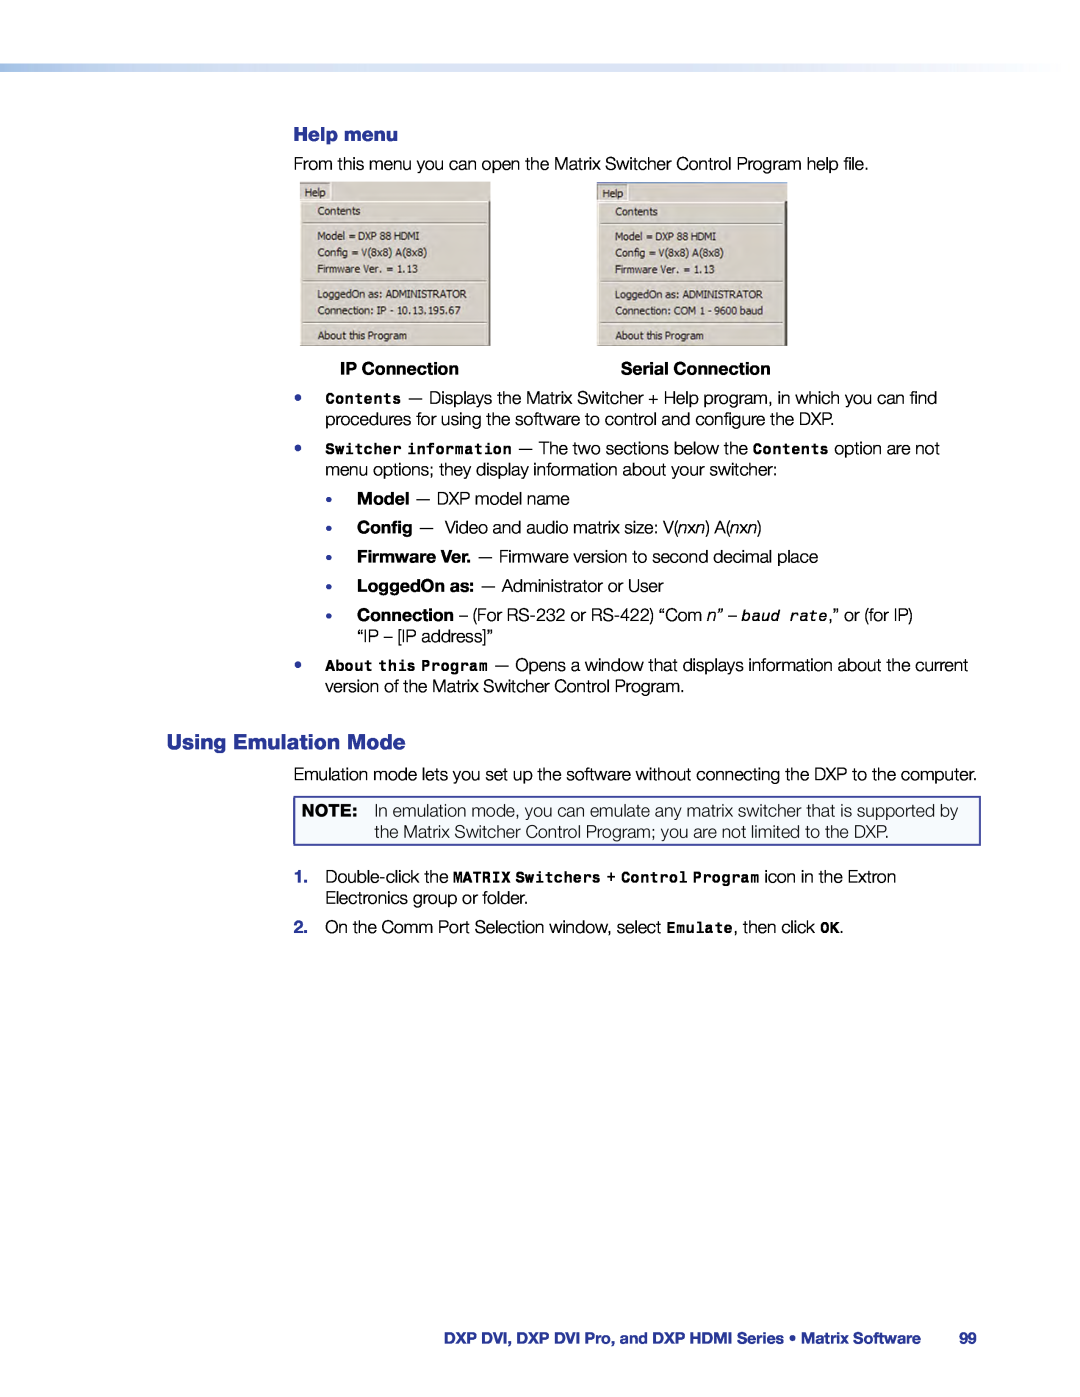 Extron electronic DXP DVI PRO manual Using Emulation Mode, Help menu, IP Connection 